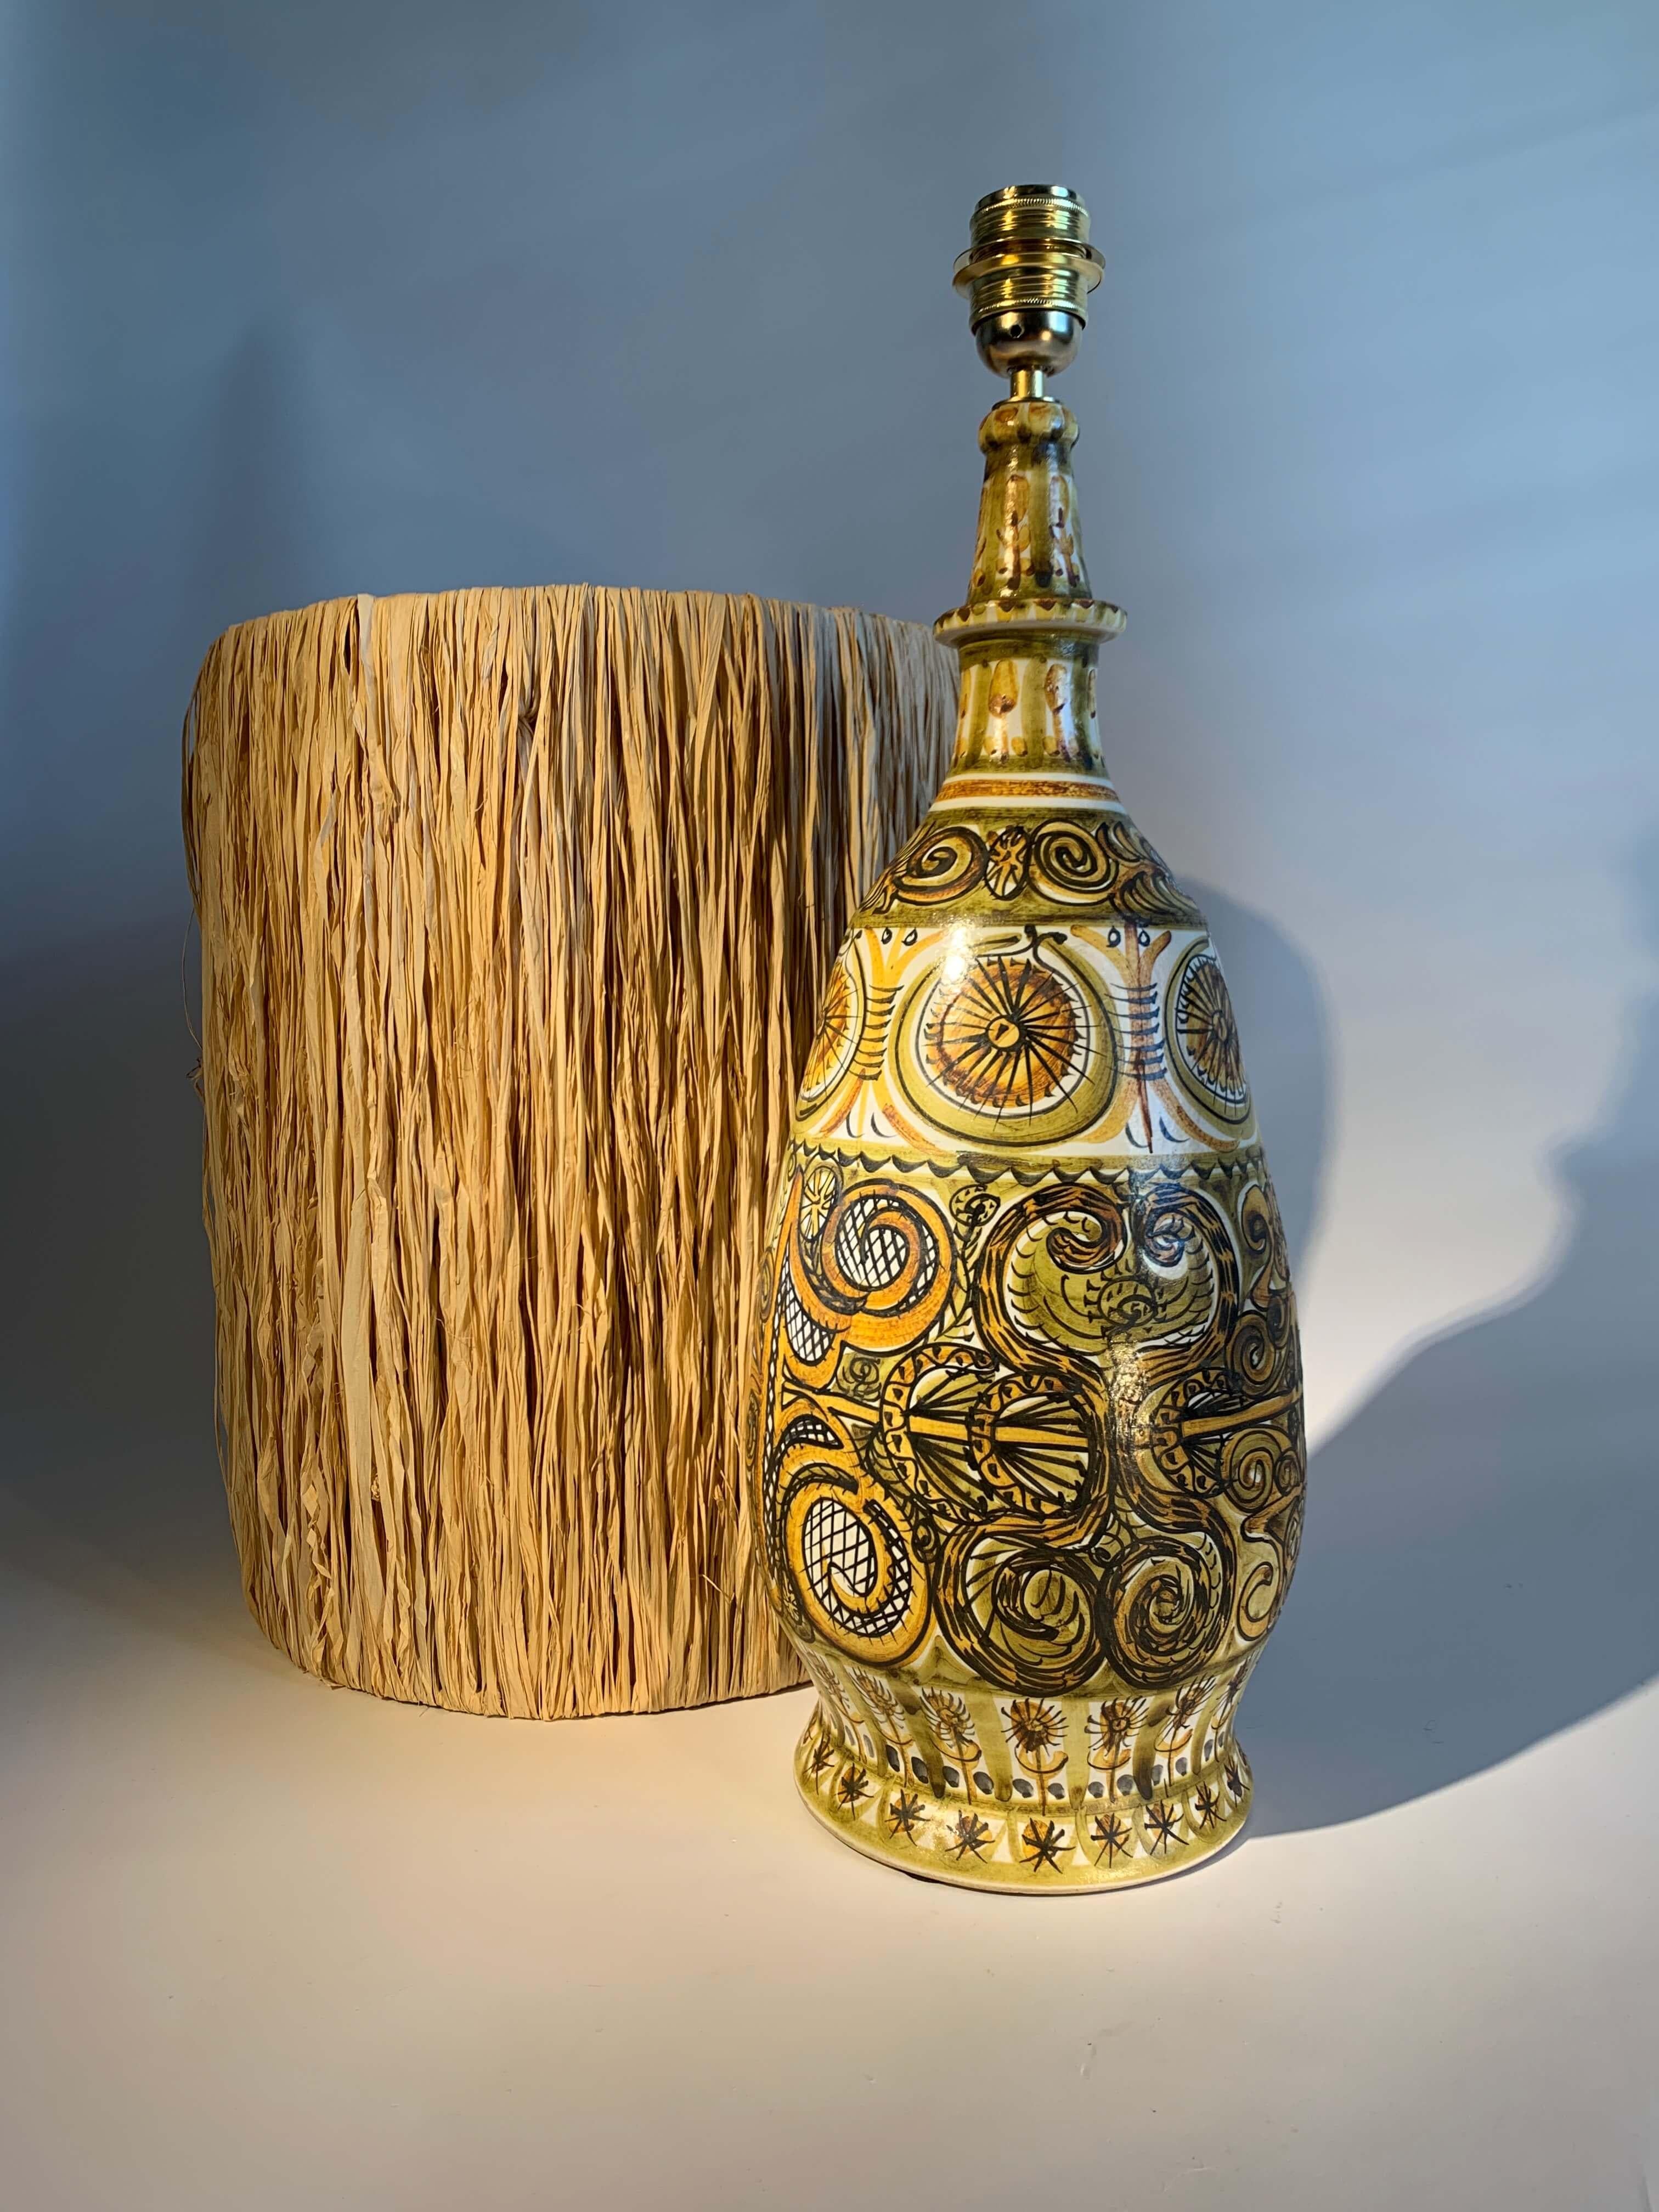 André Horellou Keramik Lampe, Frankreich (Handgefertigt) im Angebot